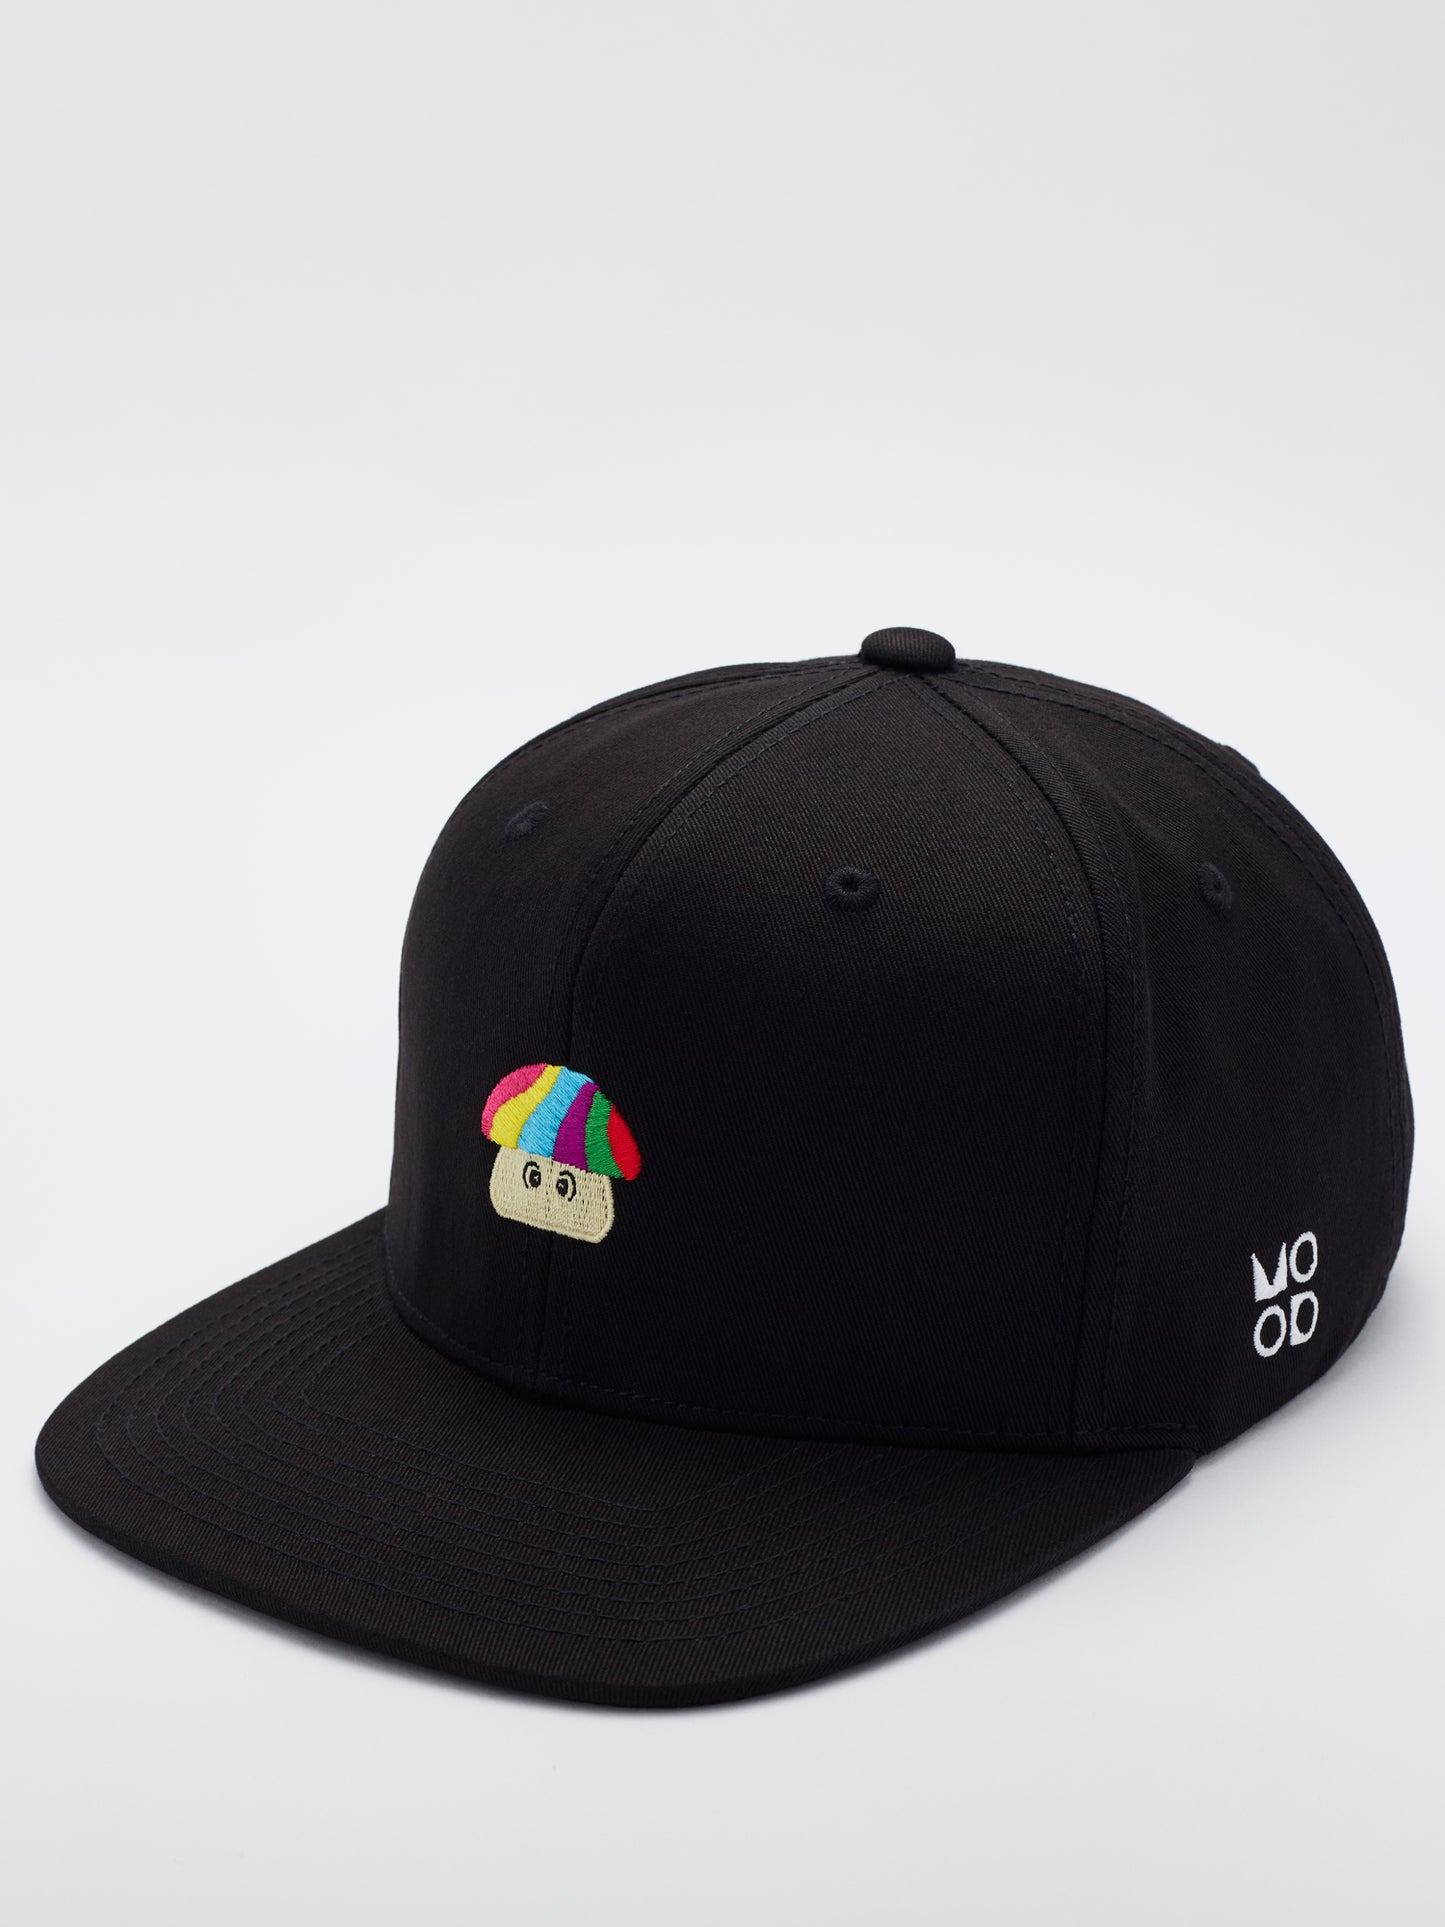 Load image into Gallery viewer, MOOD Brand - Shroom OG baseball cap in black flat brim - side view
